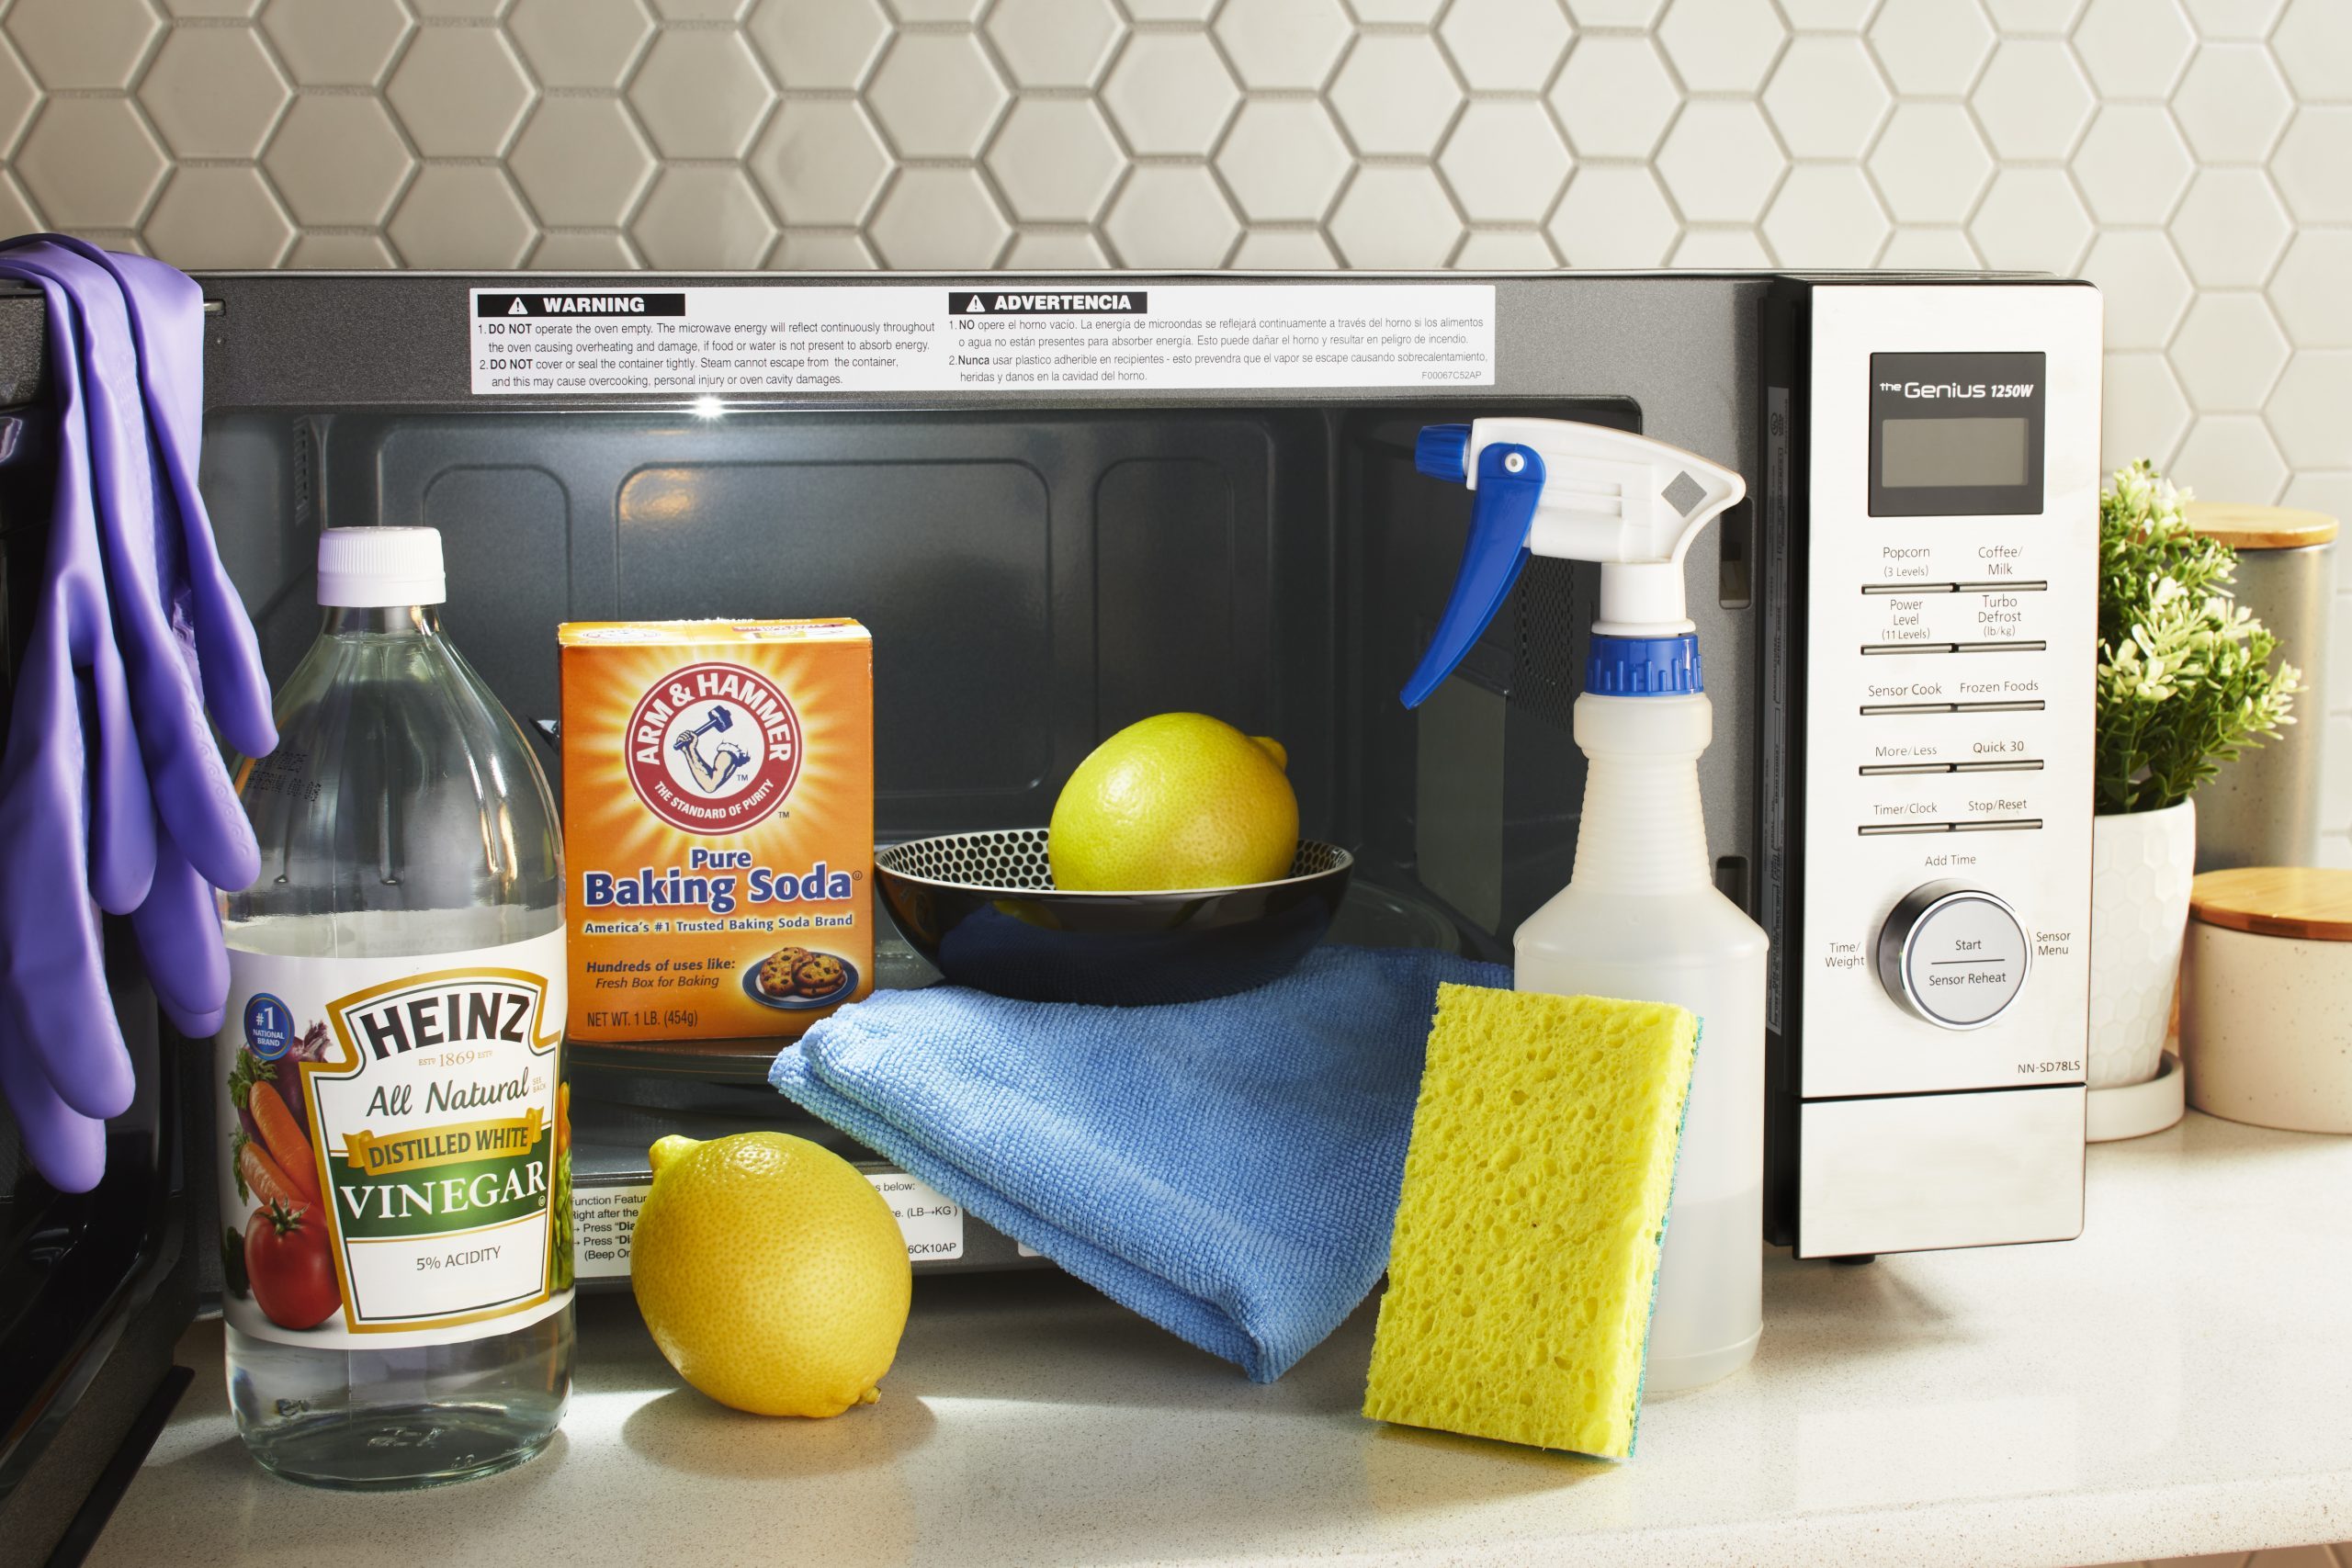 Safe food handling during proper cleaning of microwave ovens